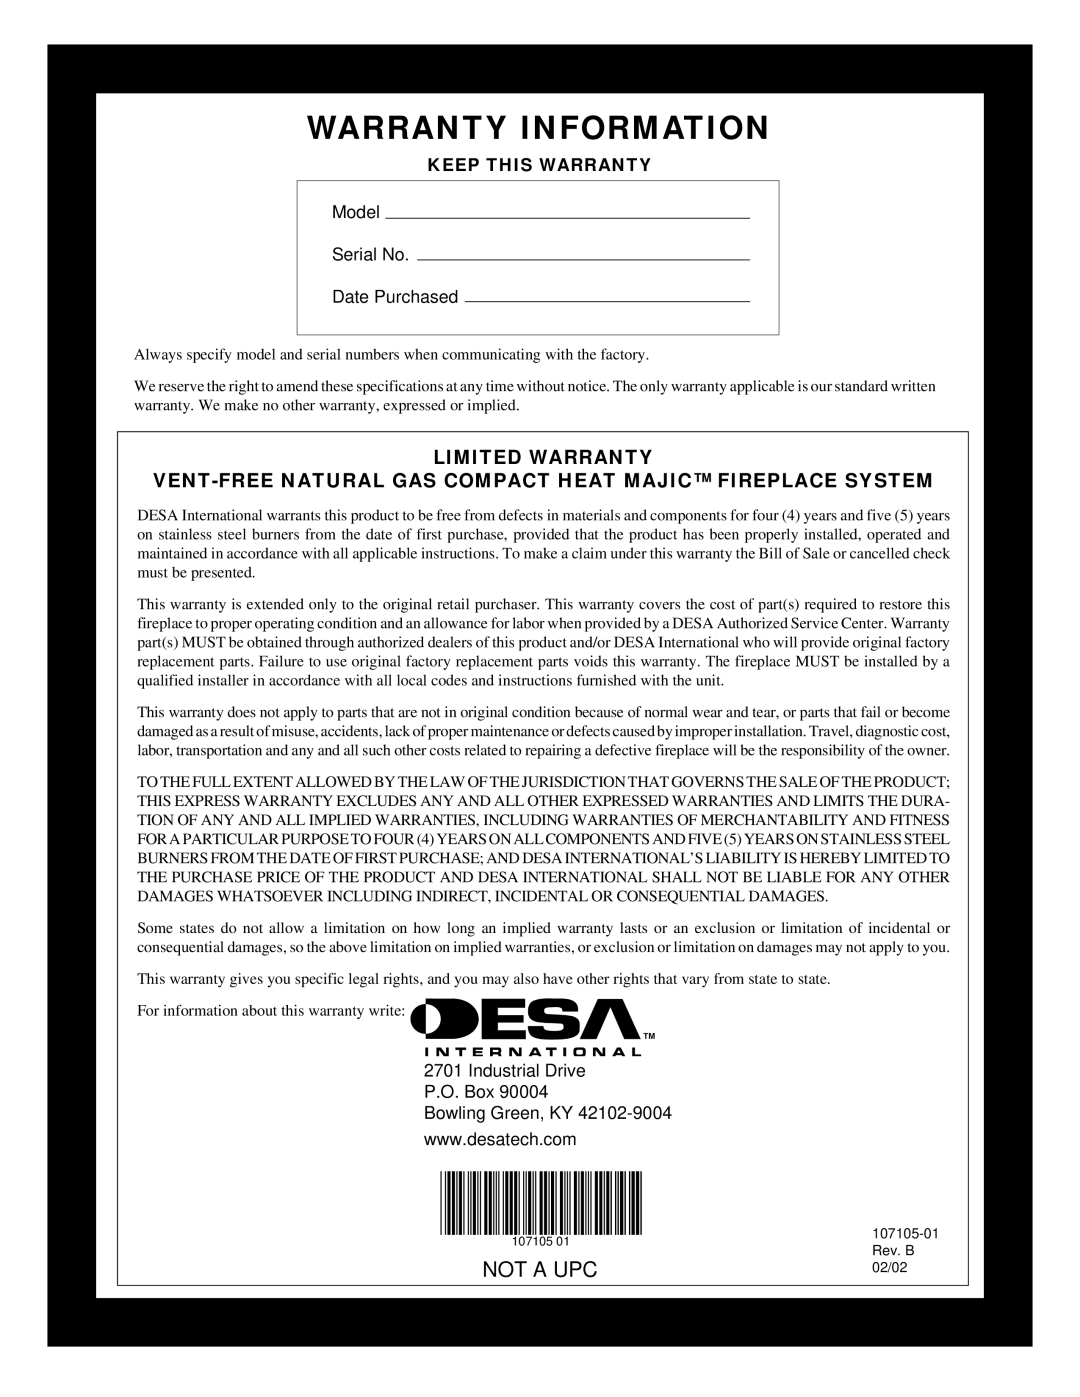 Desa FMH26TN 14 installation manual Warranty Information, Limited Warranty, Not A Upc, Model Serial No Date Purchased 